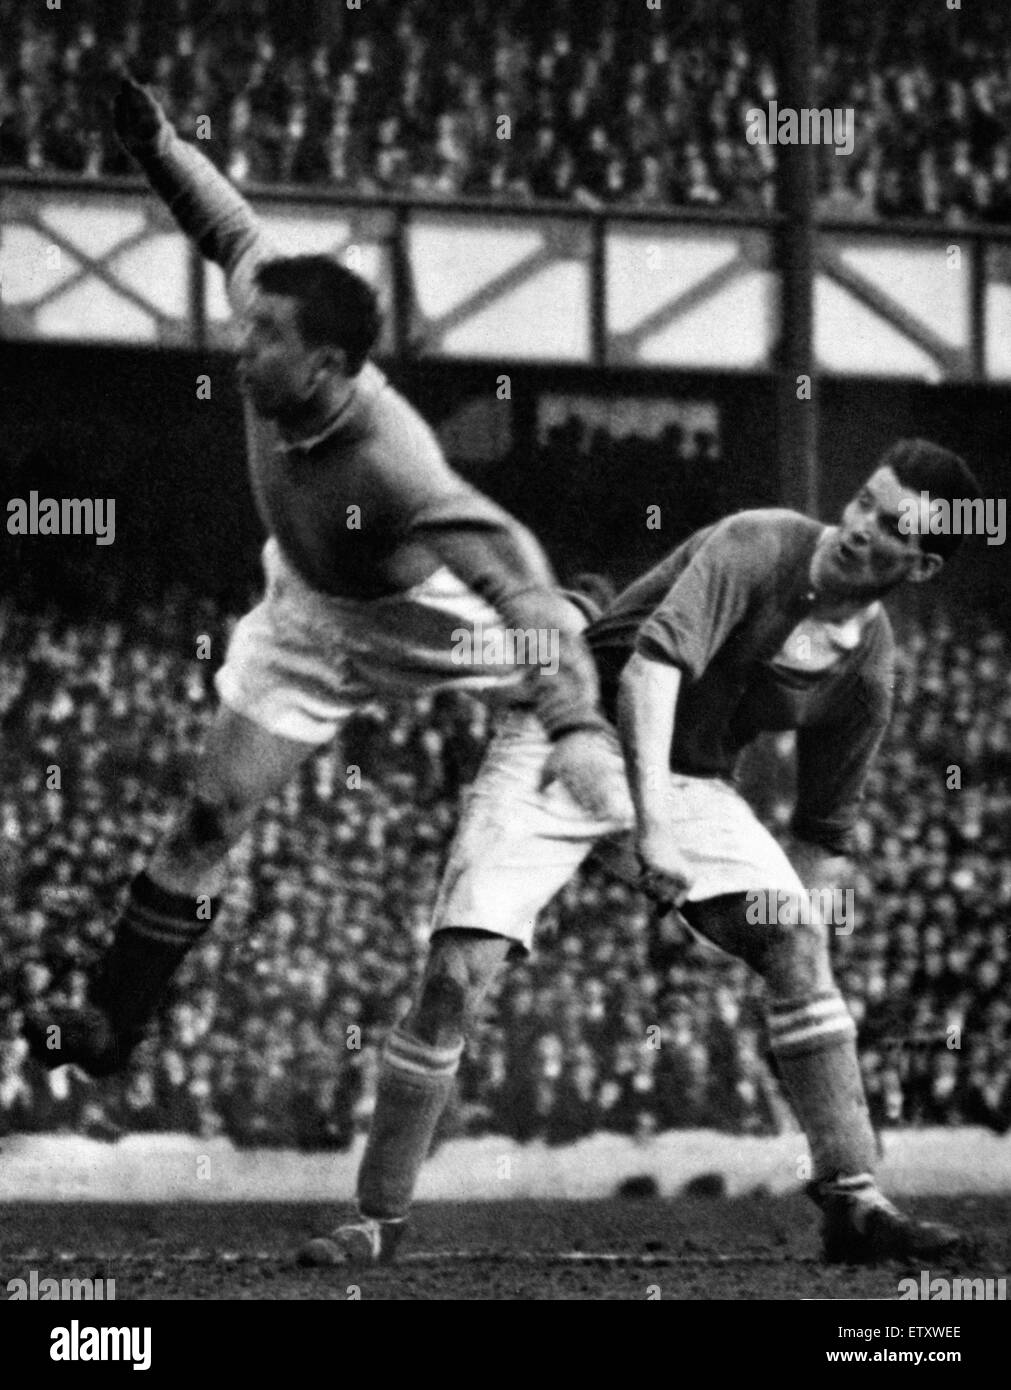 Everton footballer Dixie Dean in action for his team during a league match at Goodison Park. Circa 1935. Stock Photo